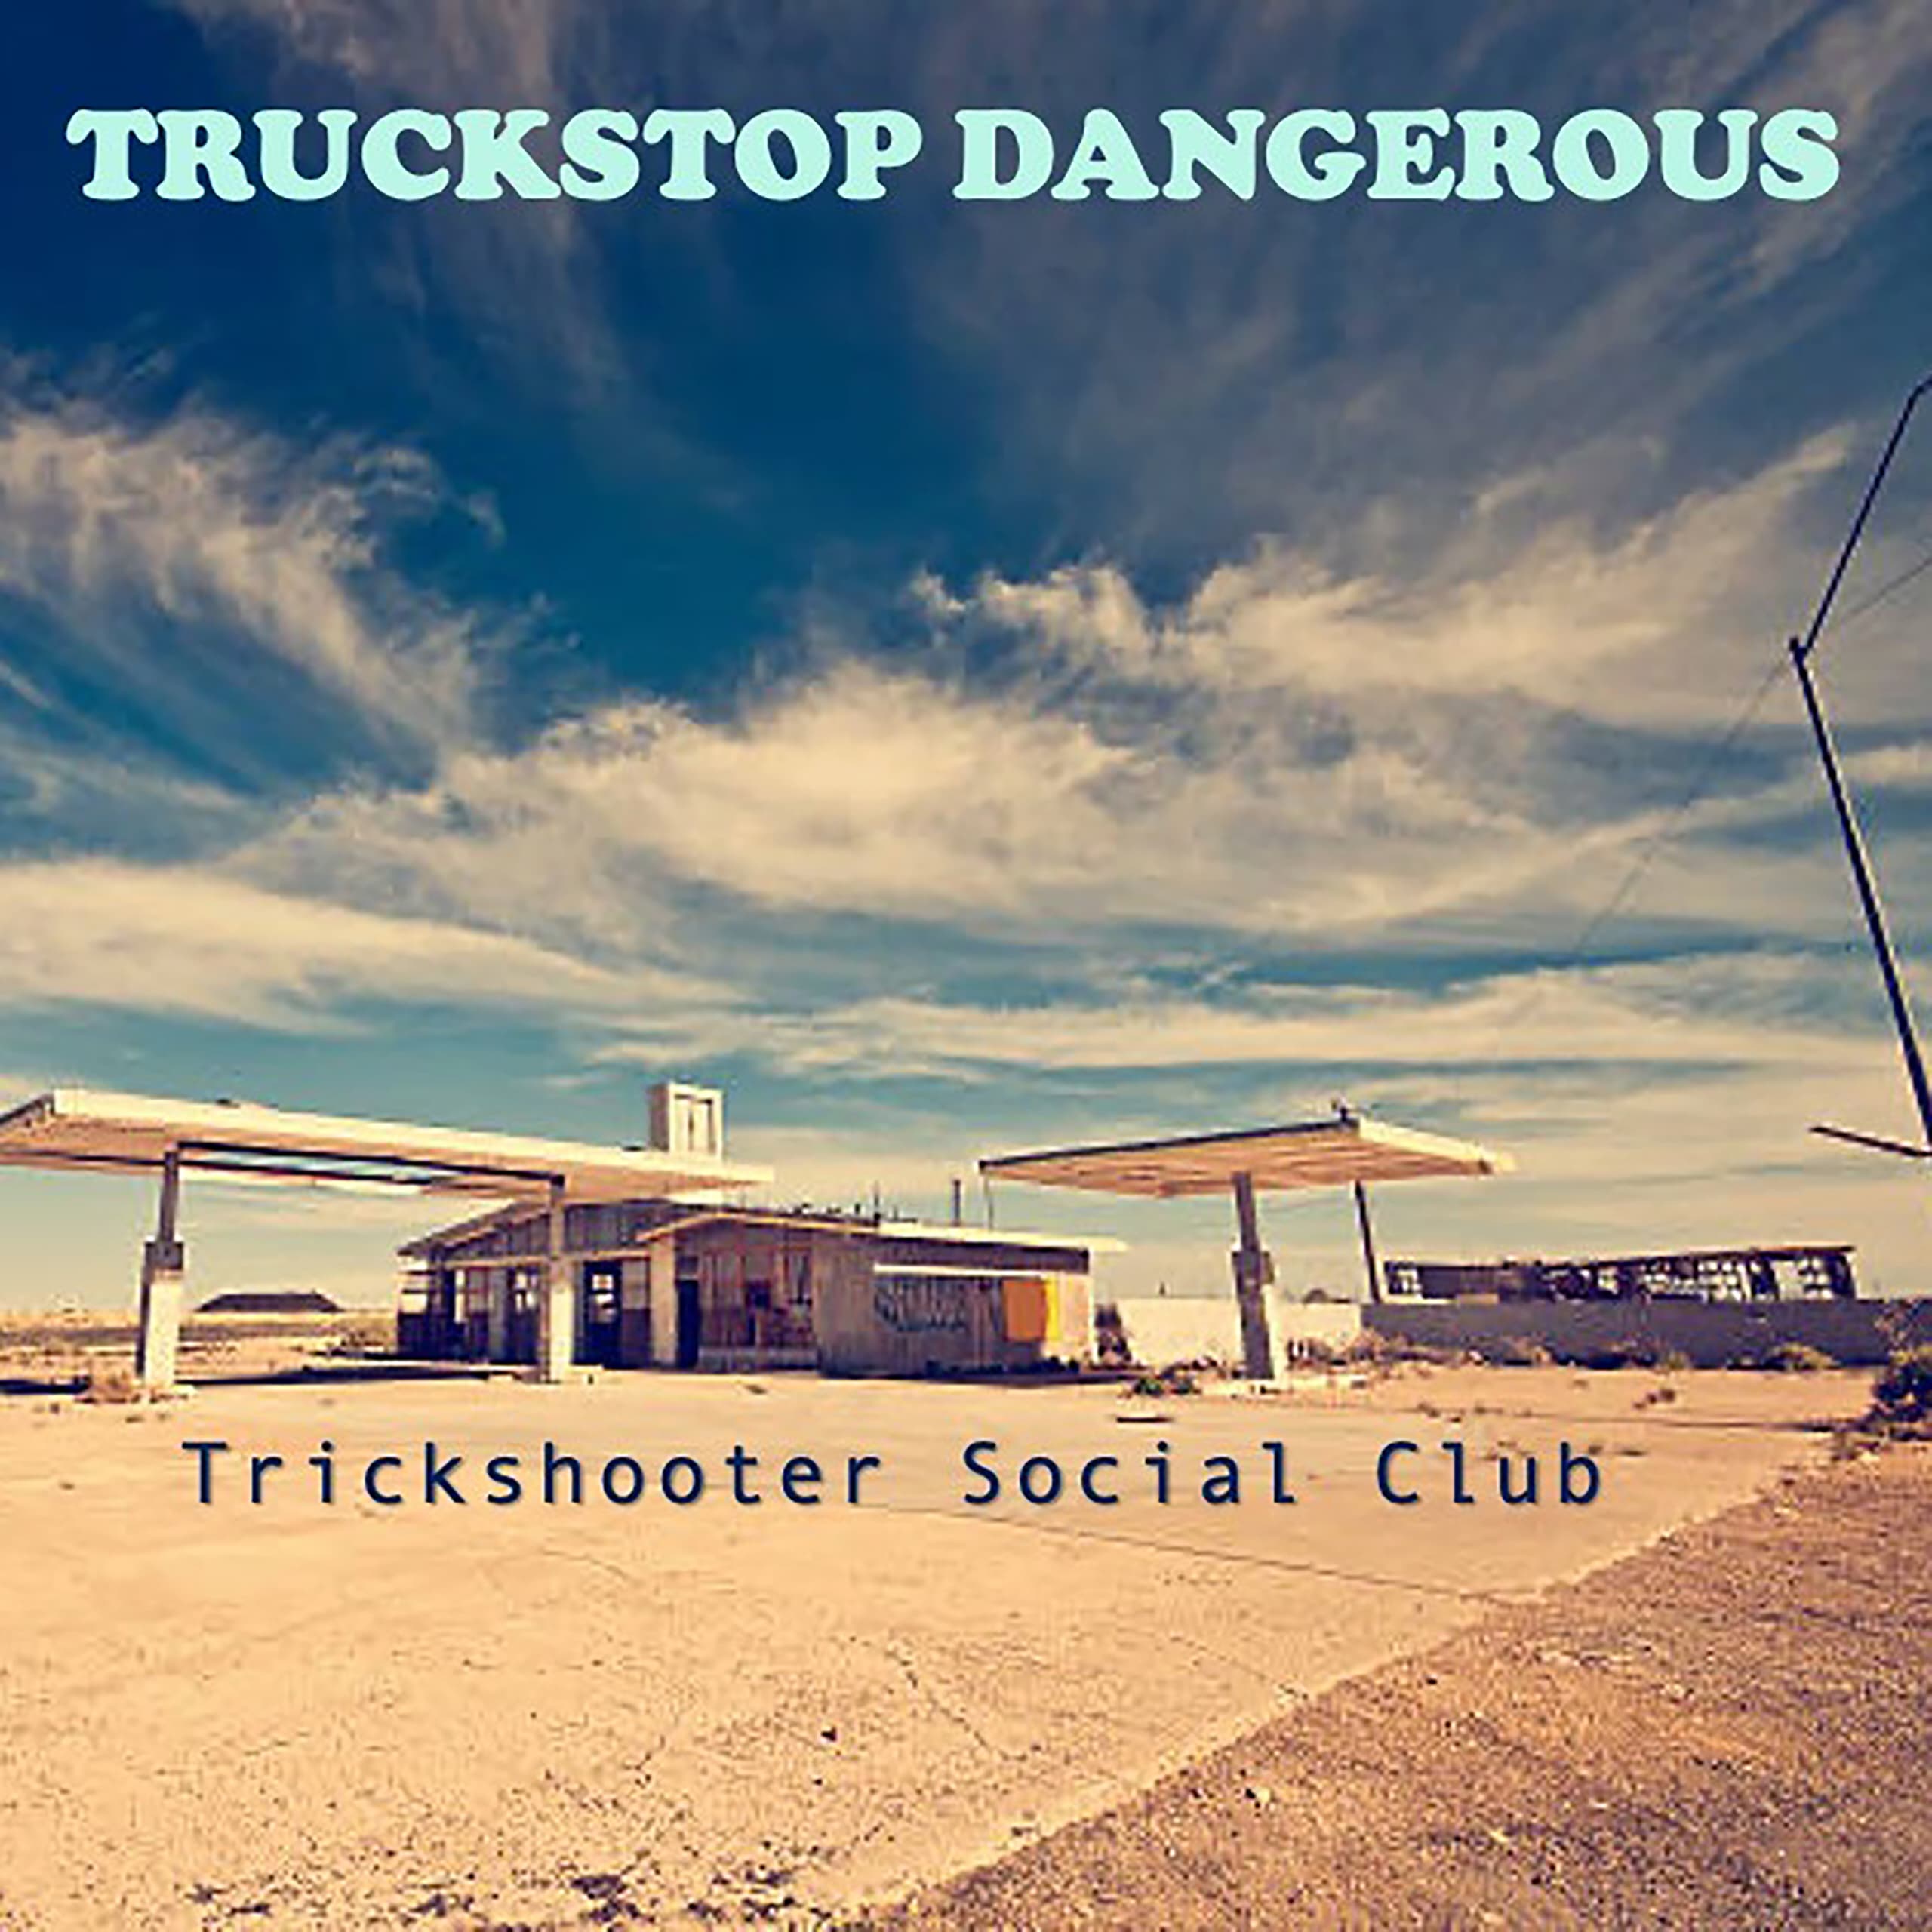 Trickshooter Social Club